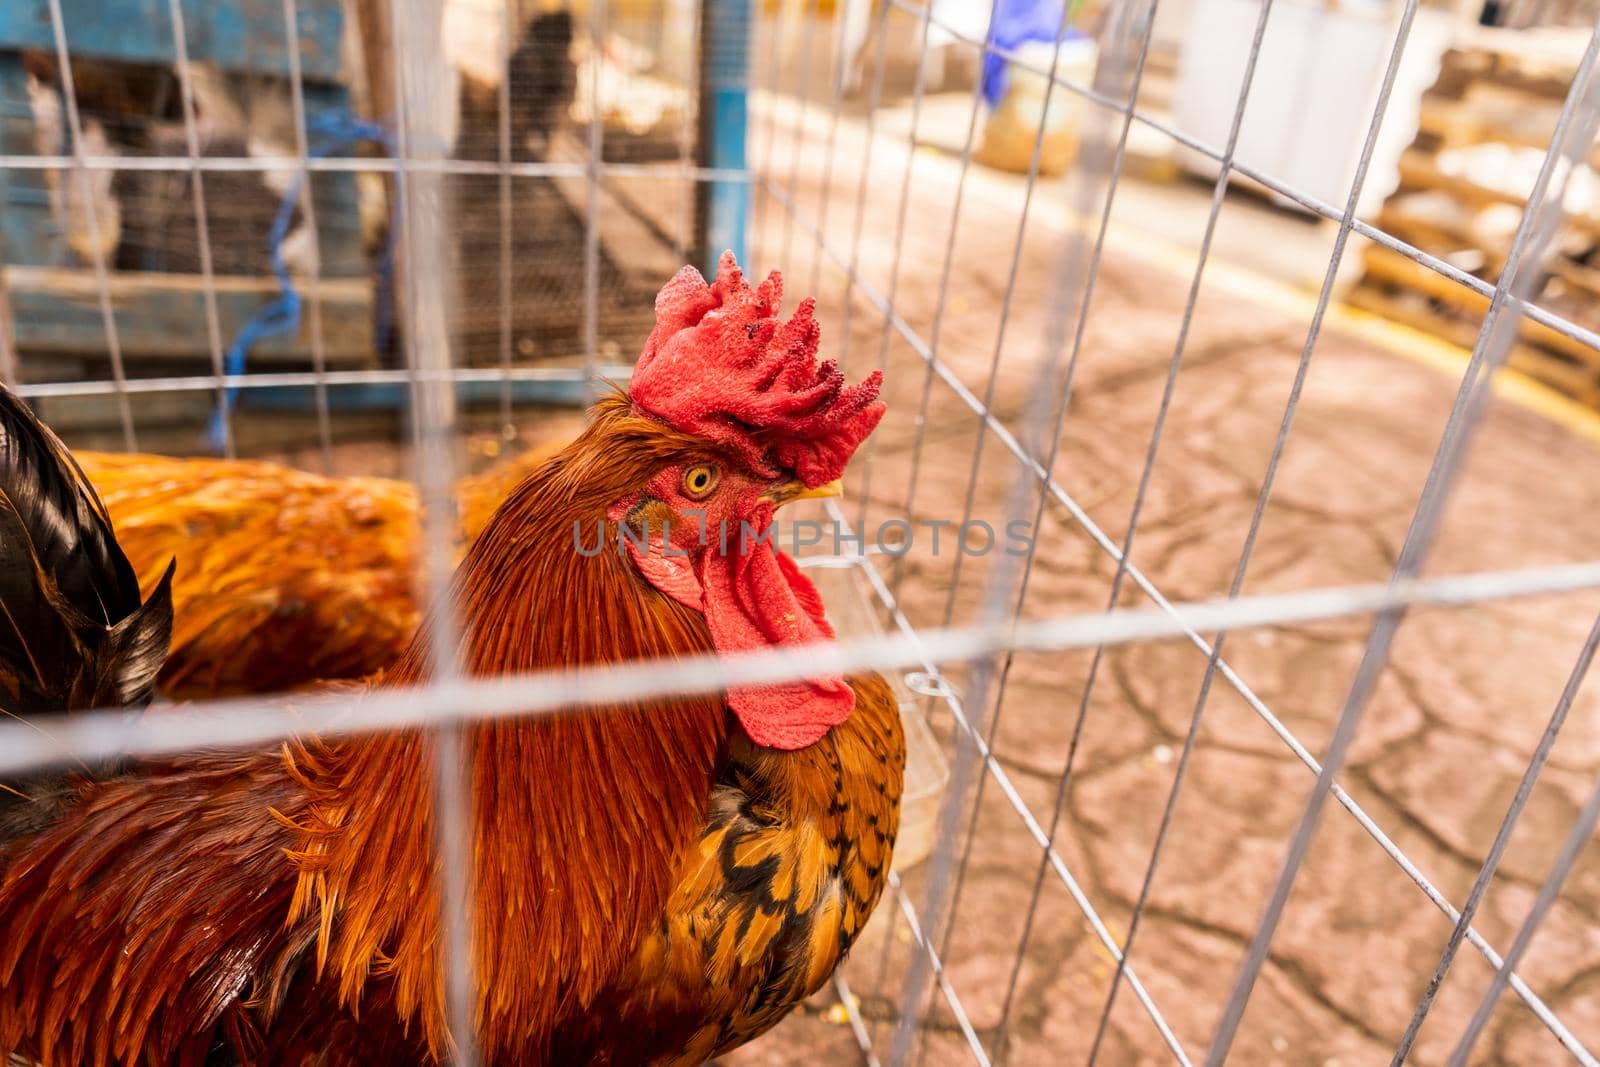 Brahma rooster in captivity for sale for breeding by cfalvarez